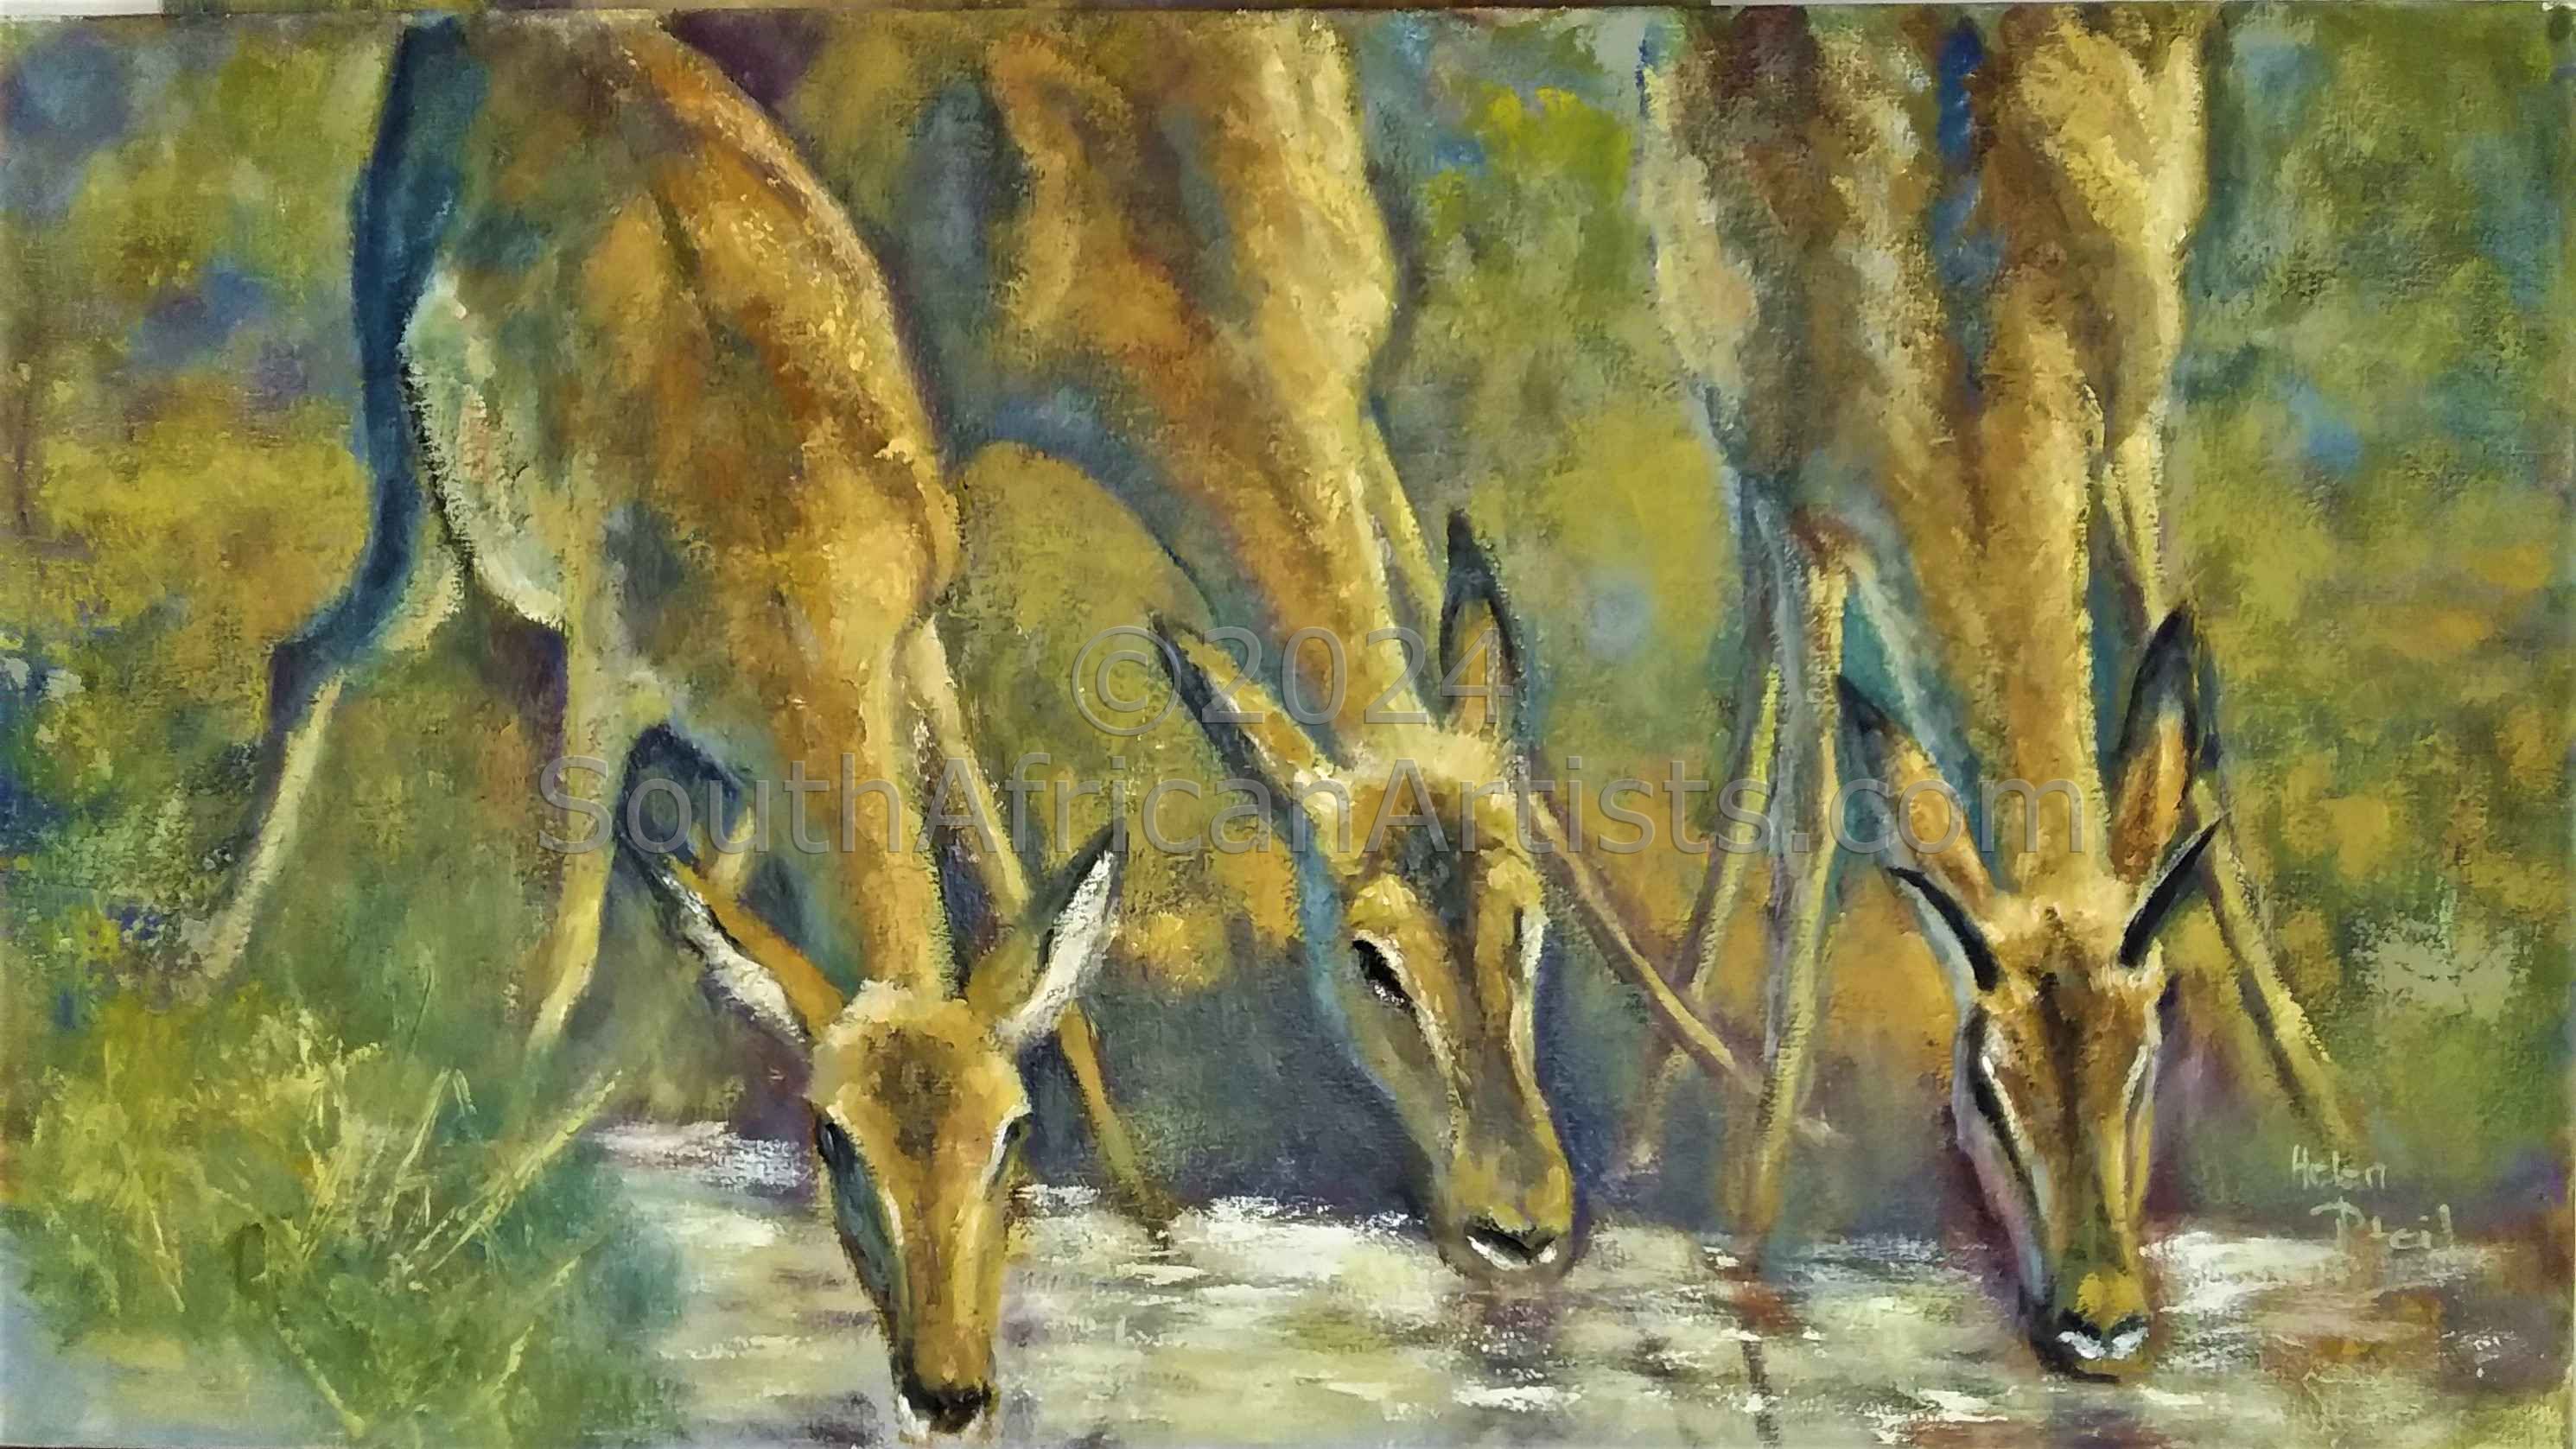 Three Springbok at Waterhole